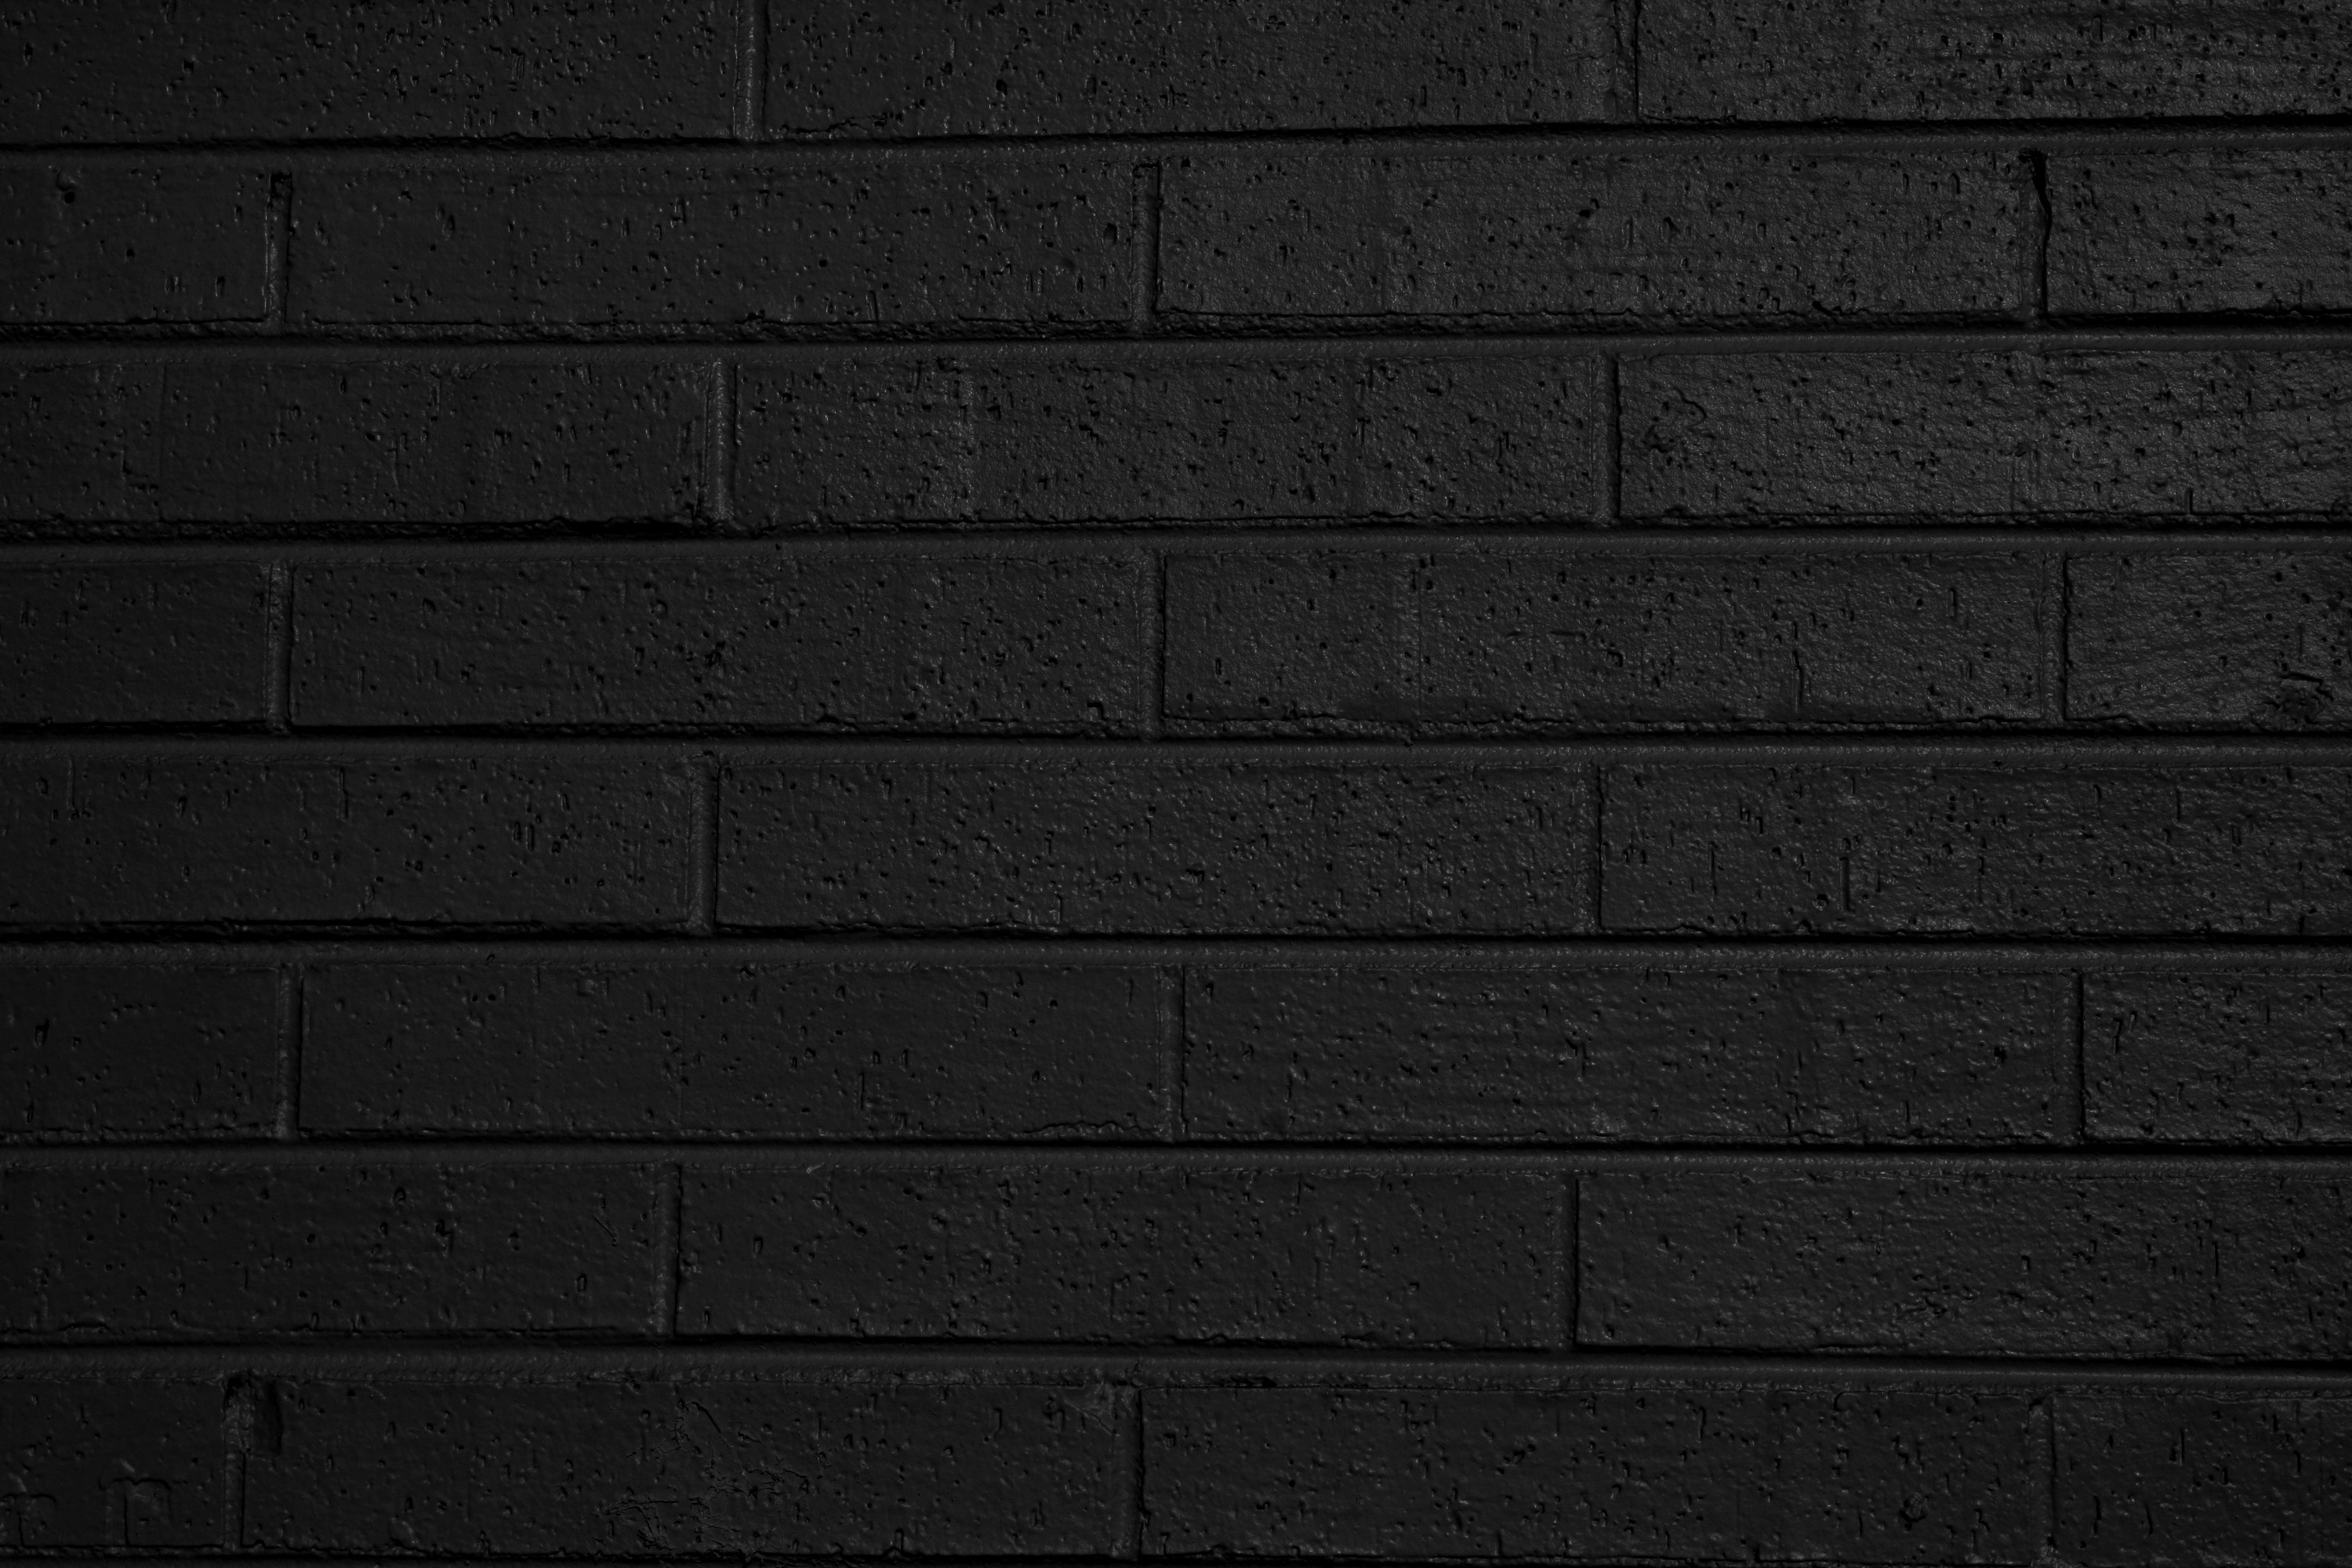 Bricks Texture From Public Domain Websites Like This Dark Brick